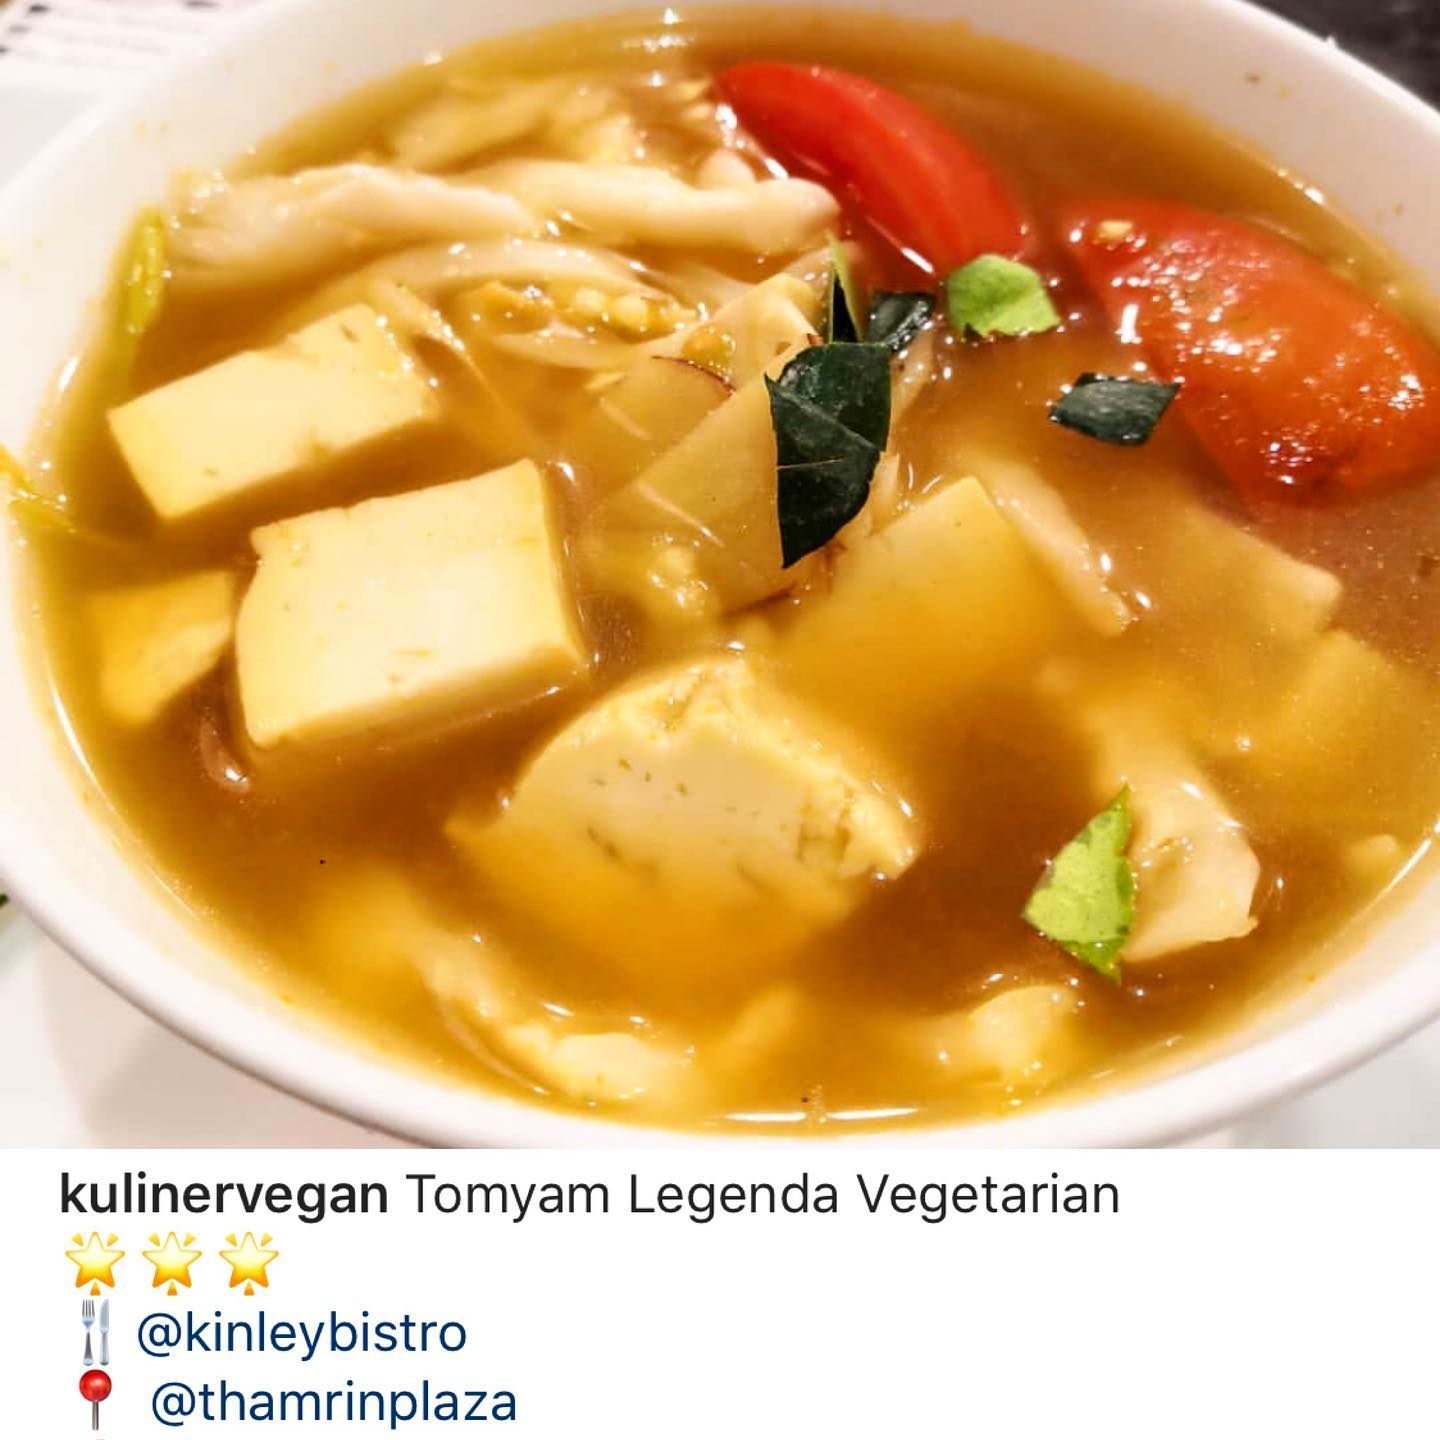 Tom Yum Vegetarian at Kinley Thai Bistro.
Thank you for sharing @kulinervegan 
Read more